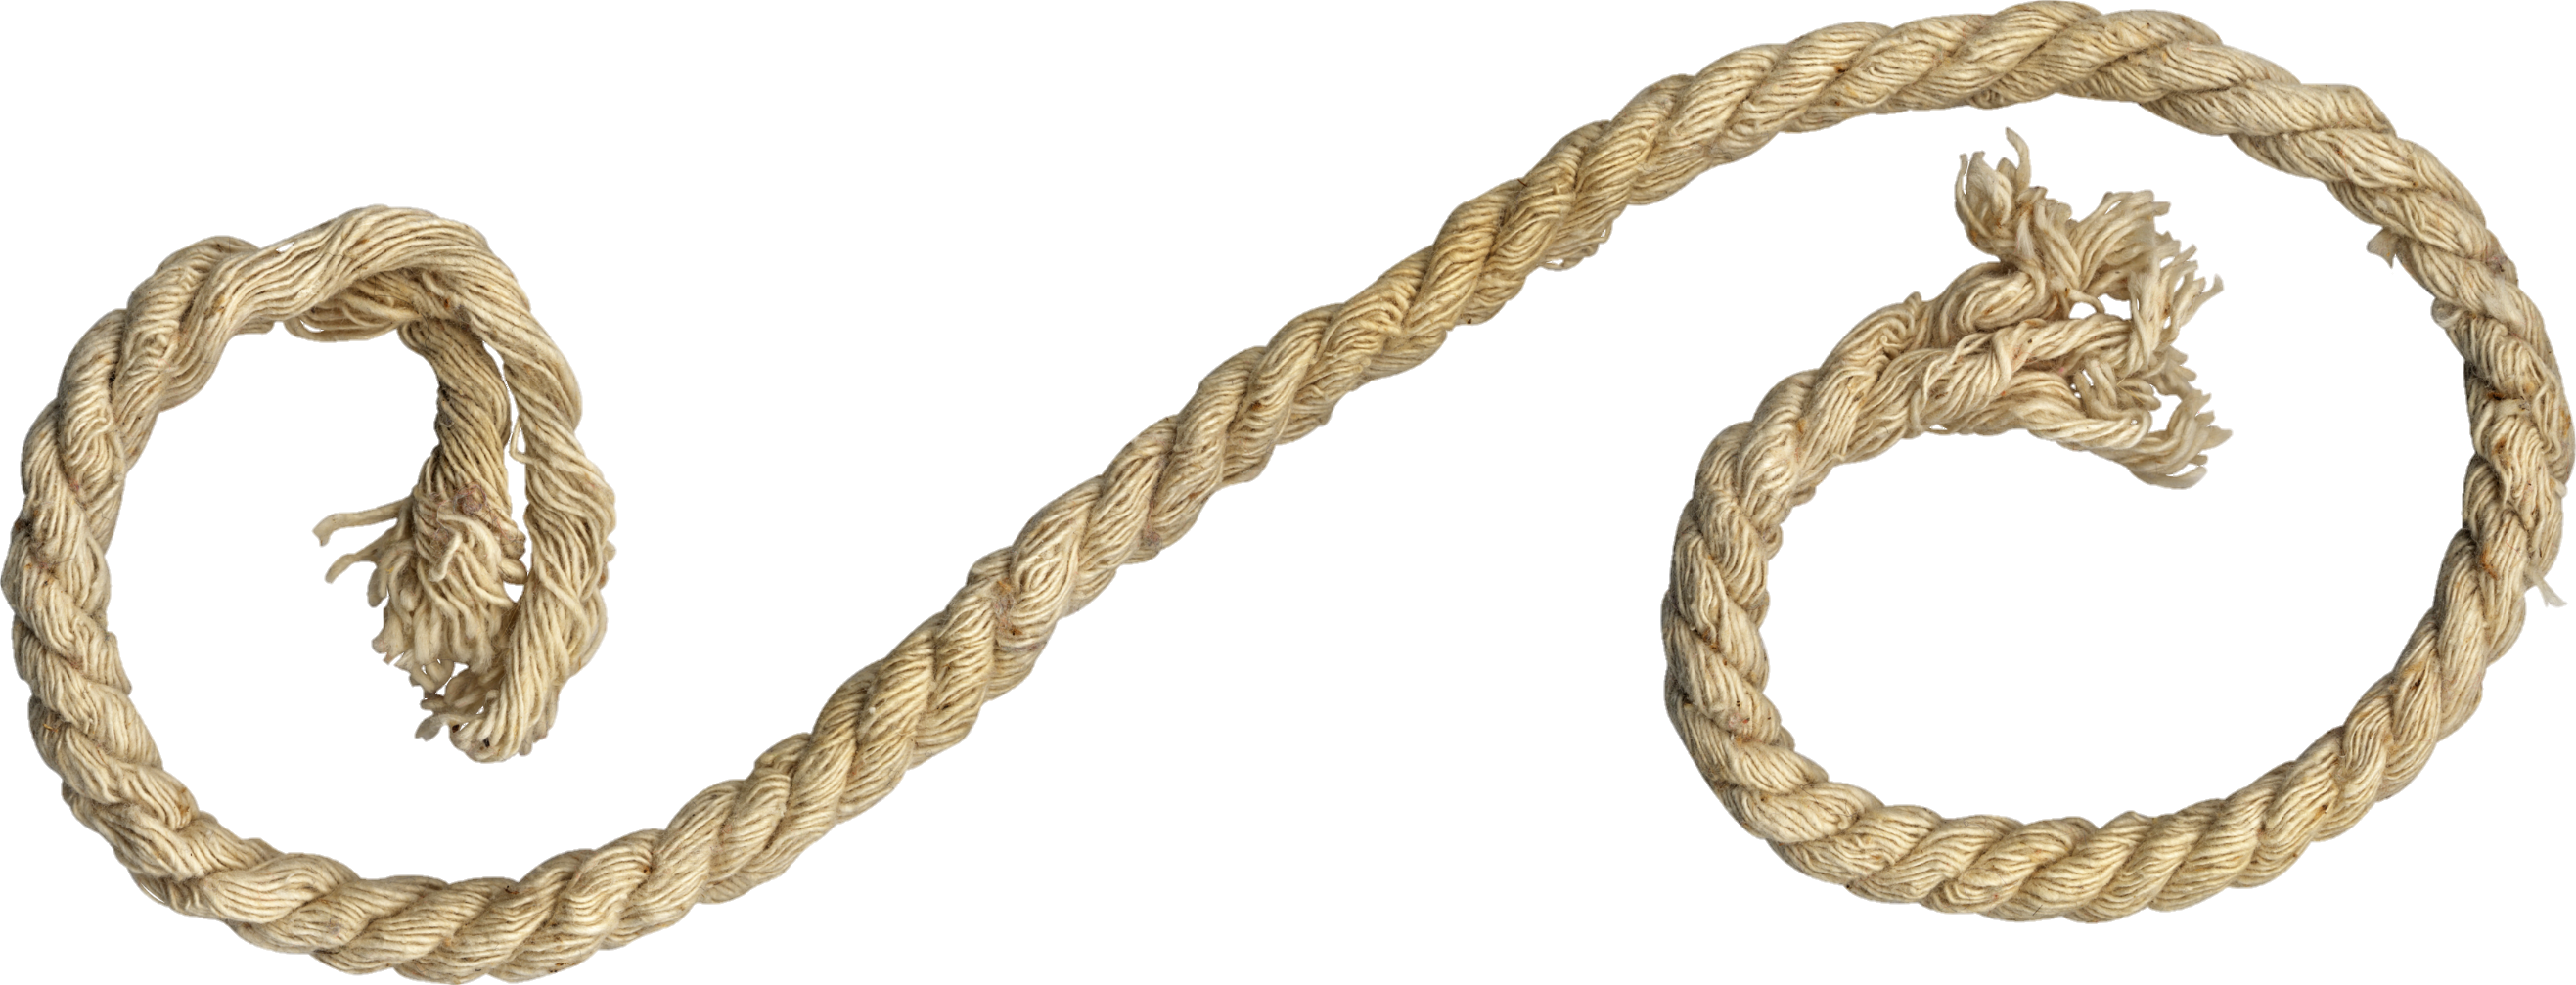 Rope-25